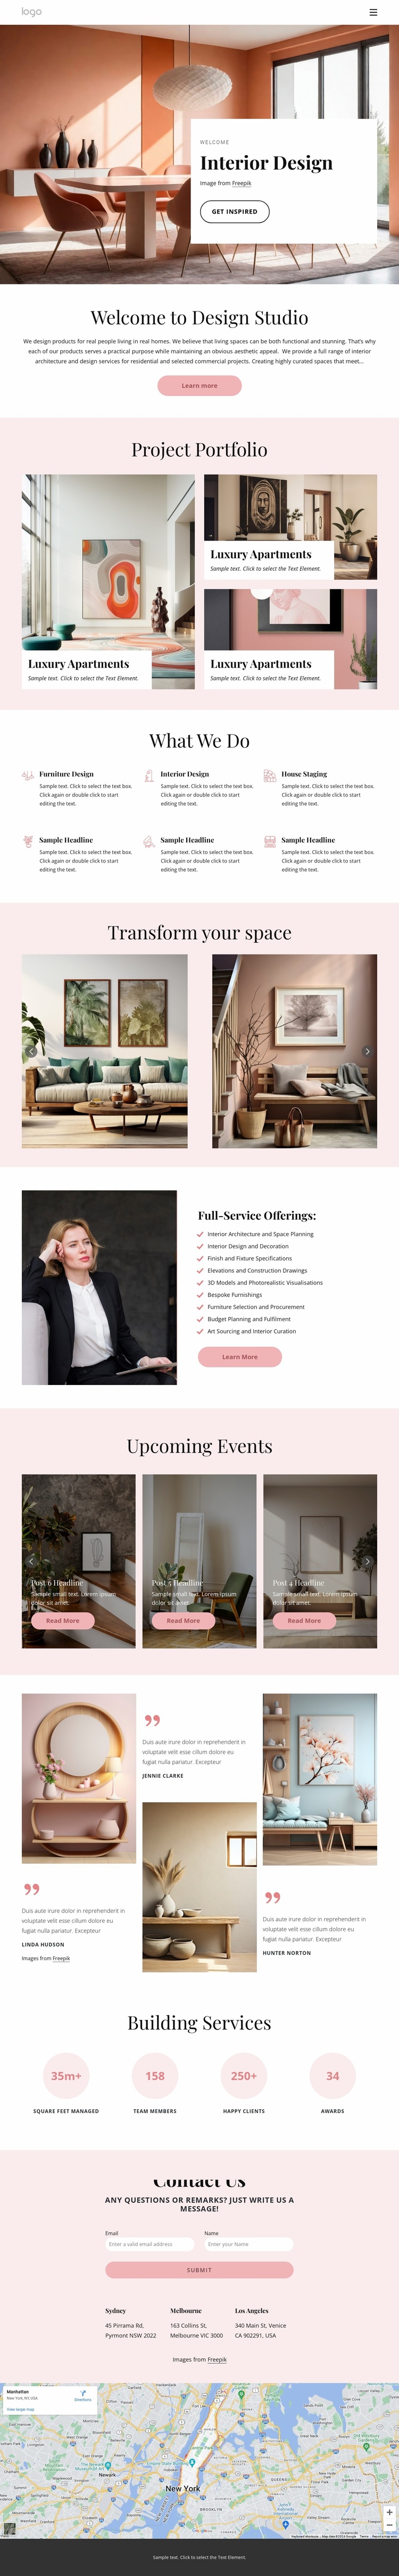 The interior design firm Website Template